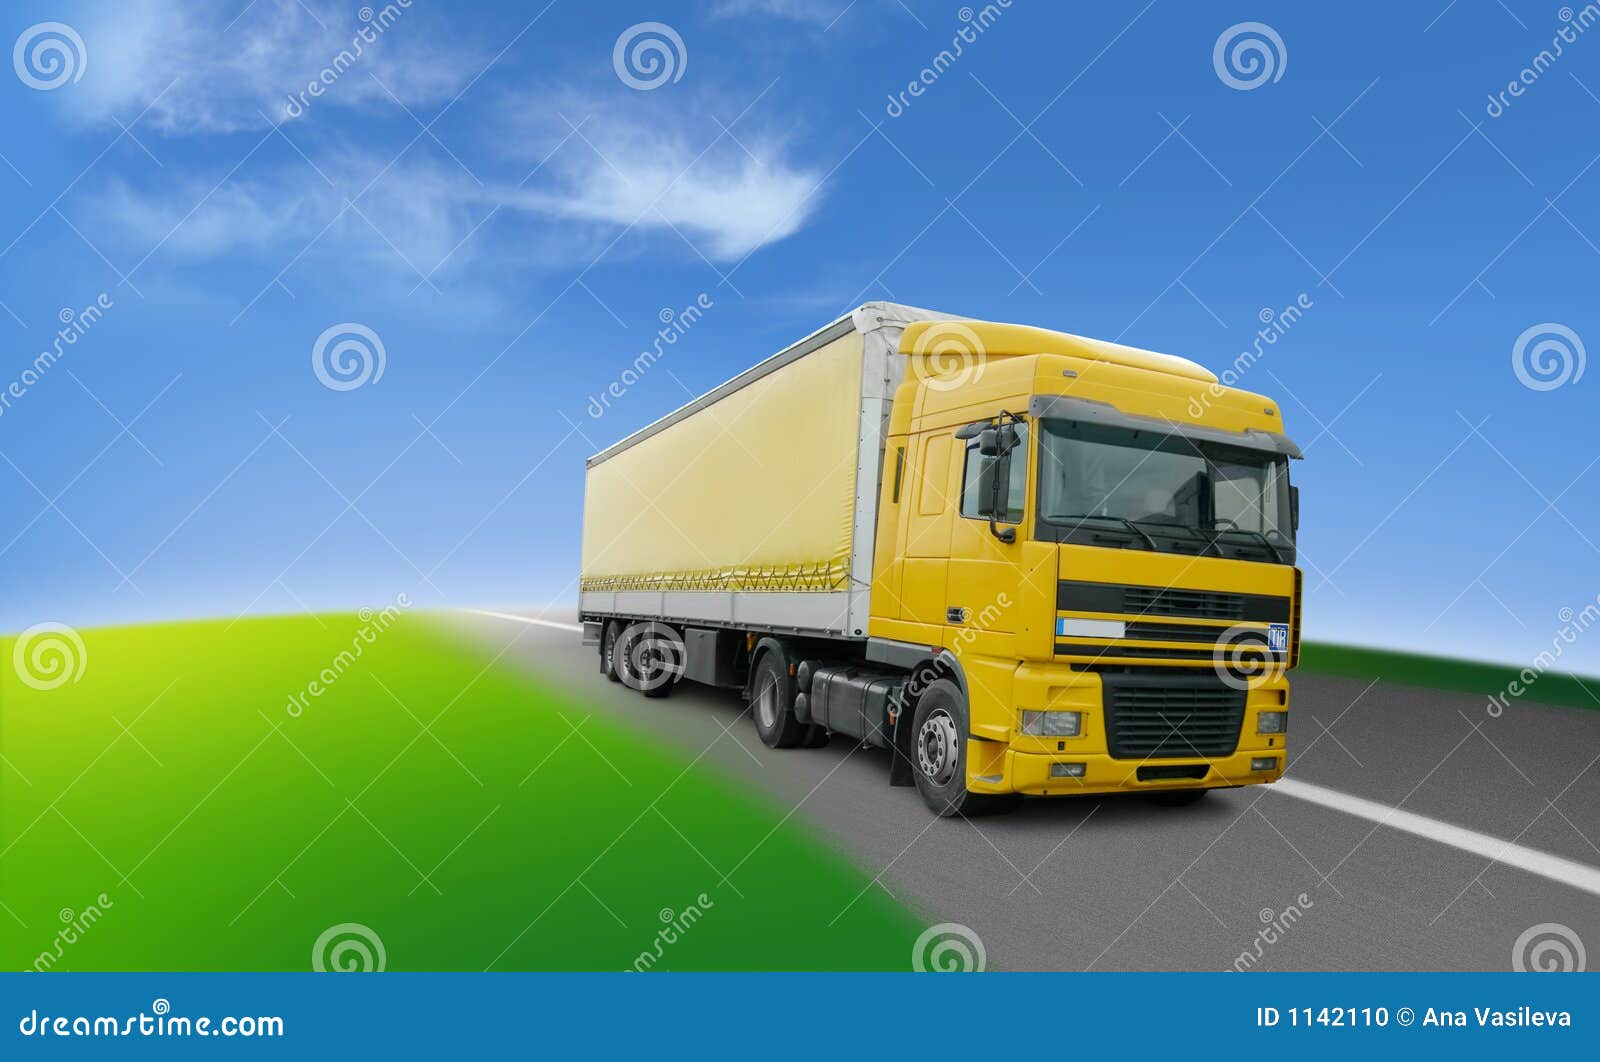 Truck  Transport And Logistics Around The World Stock Photo  Image: 1142110